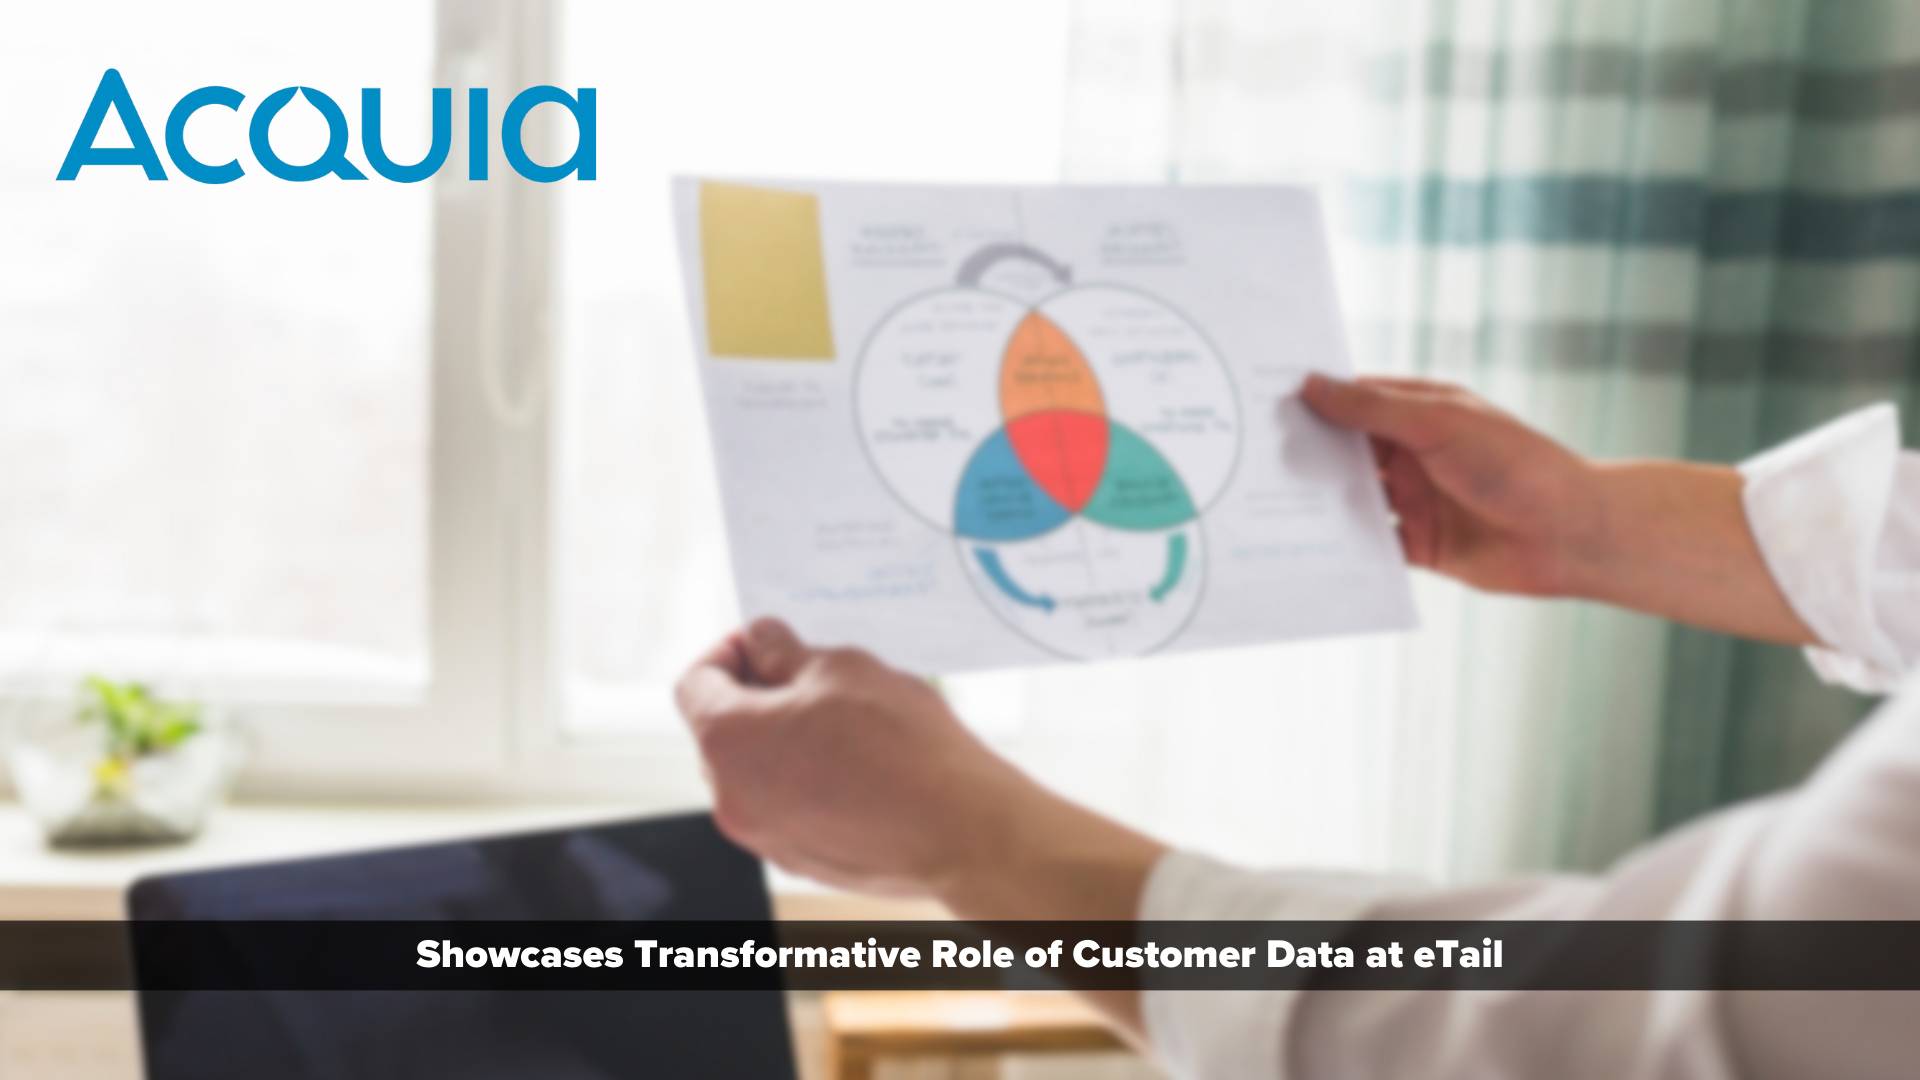 Acquia Showcases Transformative Role of Customer Data at eTail